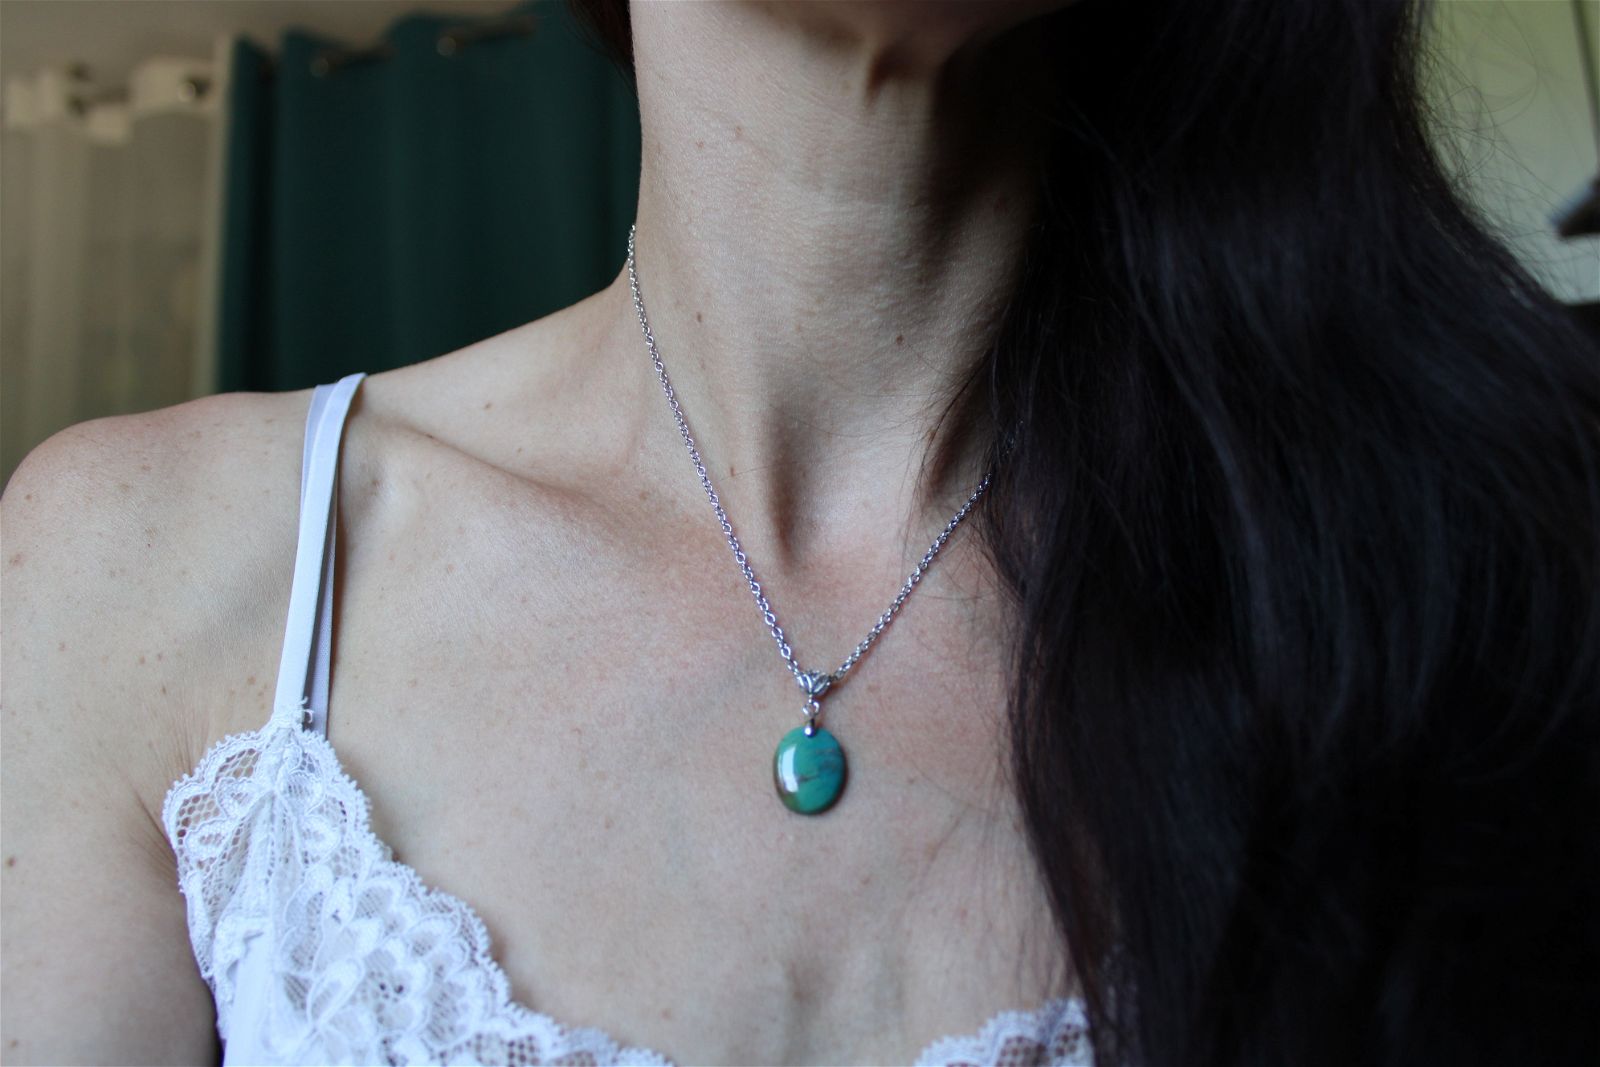 Collier turquoise avec chaîne inox - Aurore Lune 